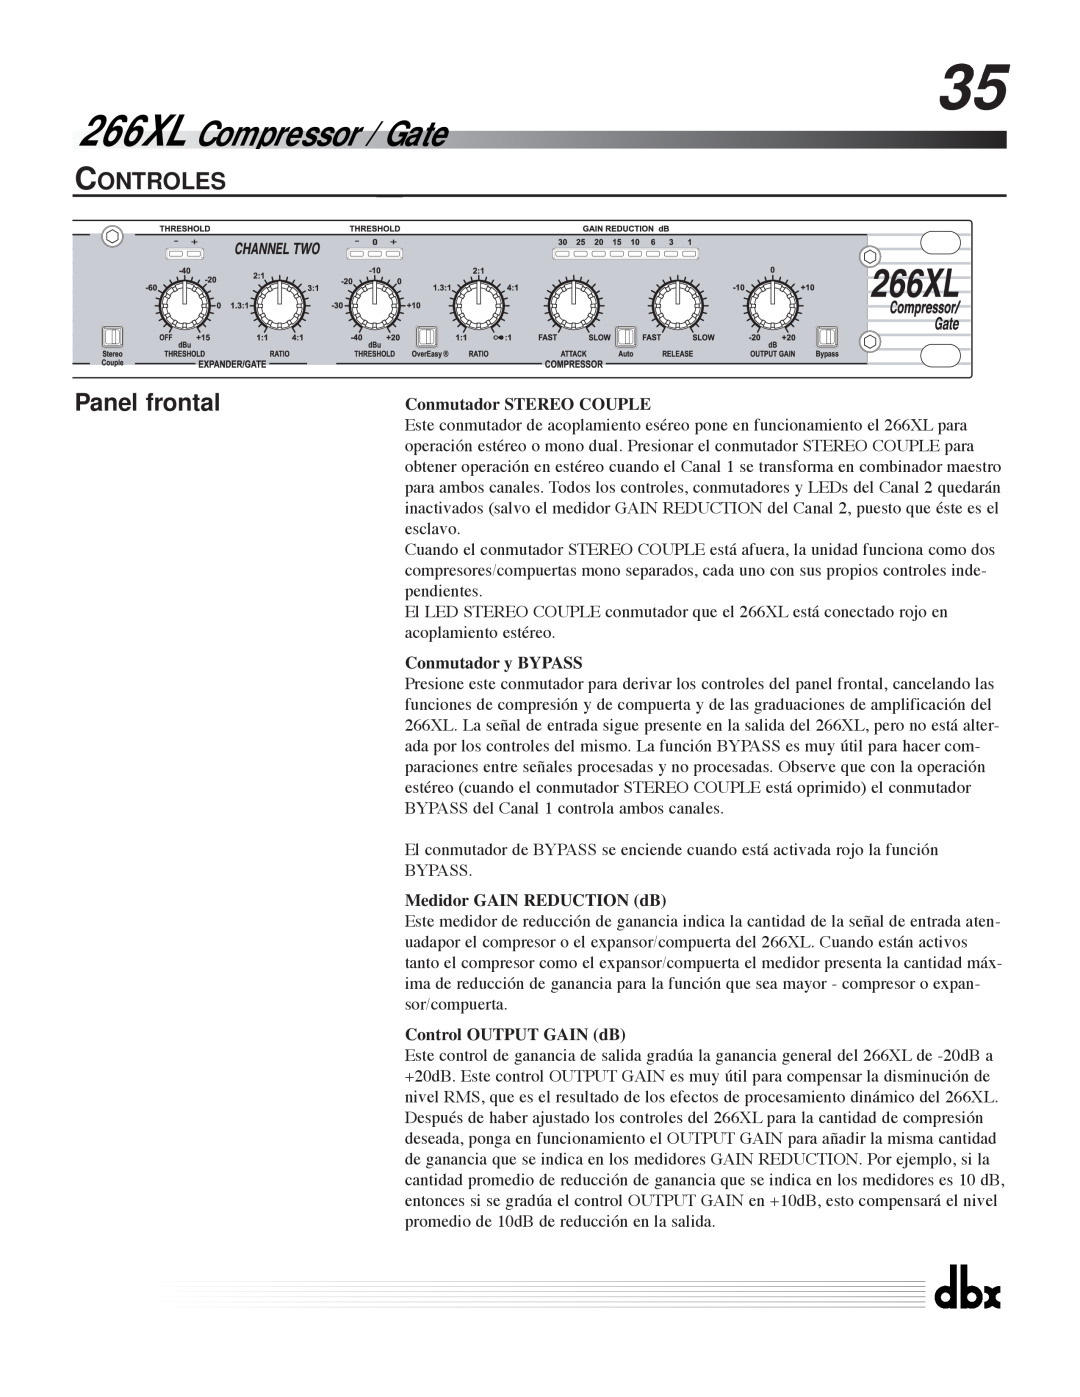 dbx Pro Controles, Panel frontal, 266XL Compressor / Gate, Conmutador STEREO COUPLE, Conmutador y BYPASS 